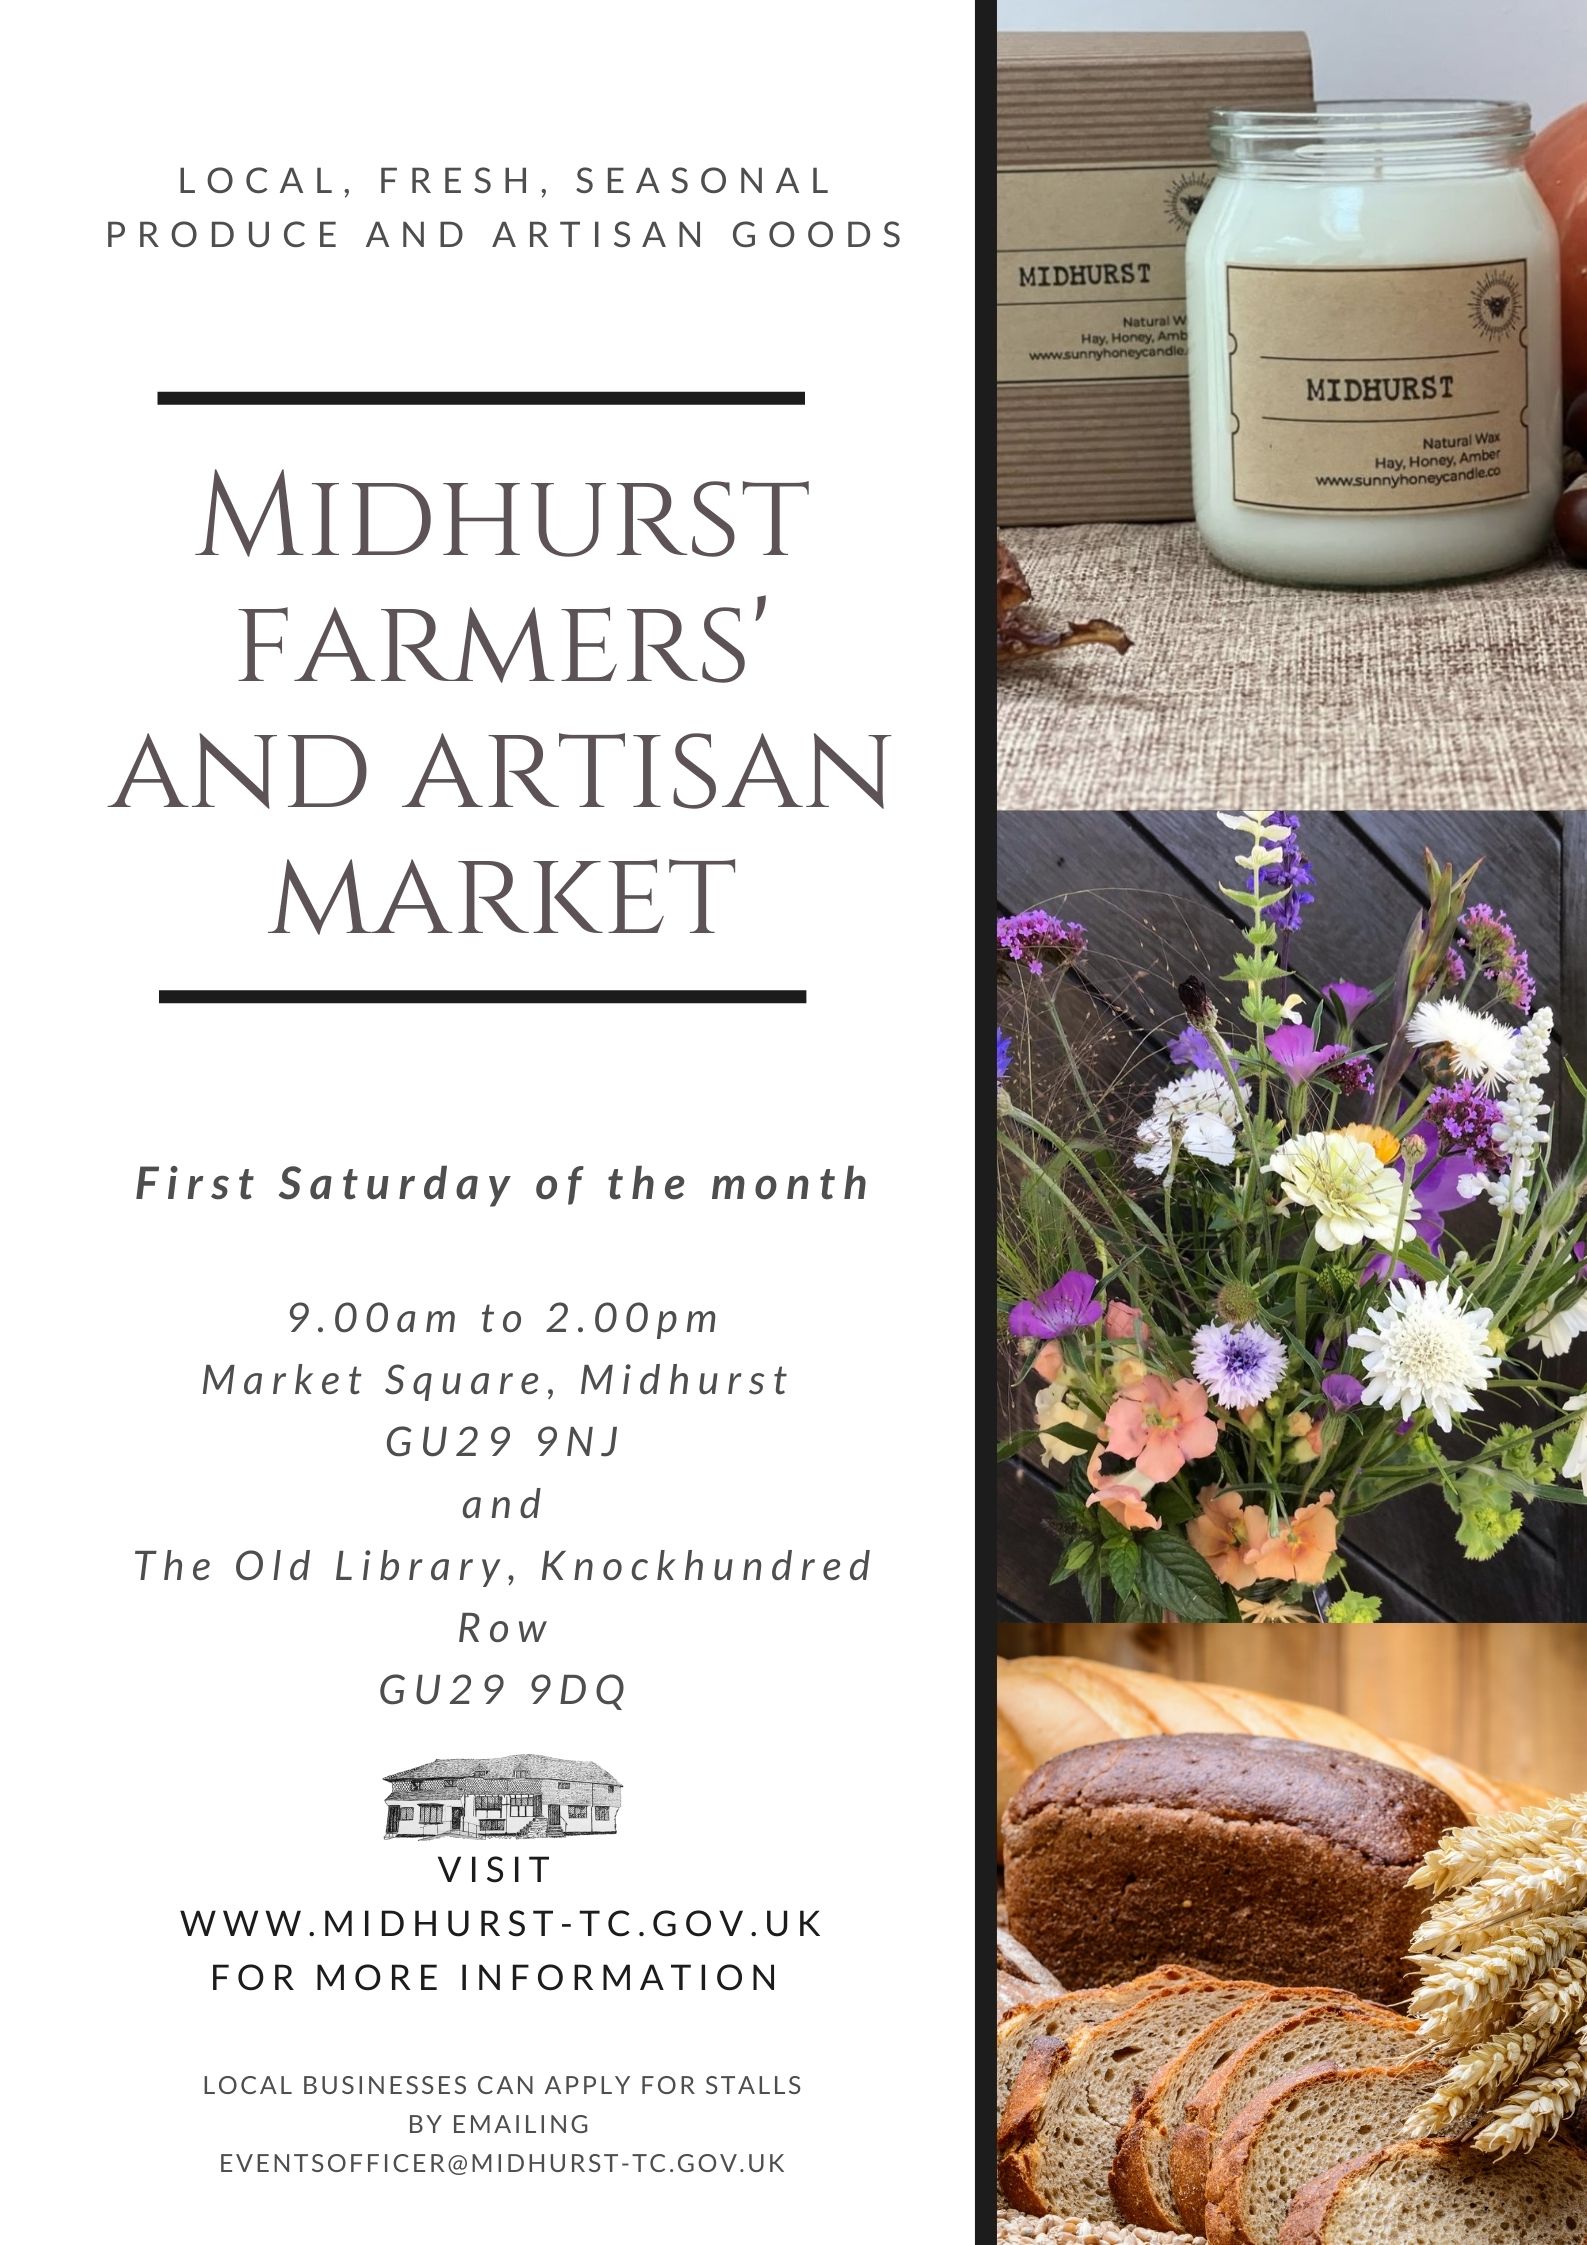 Midhurst farmers and artisan market